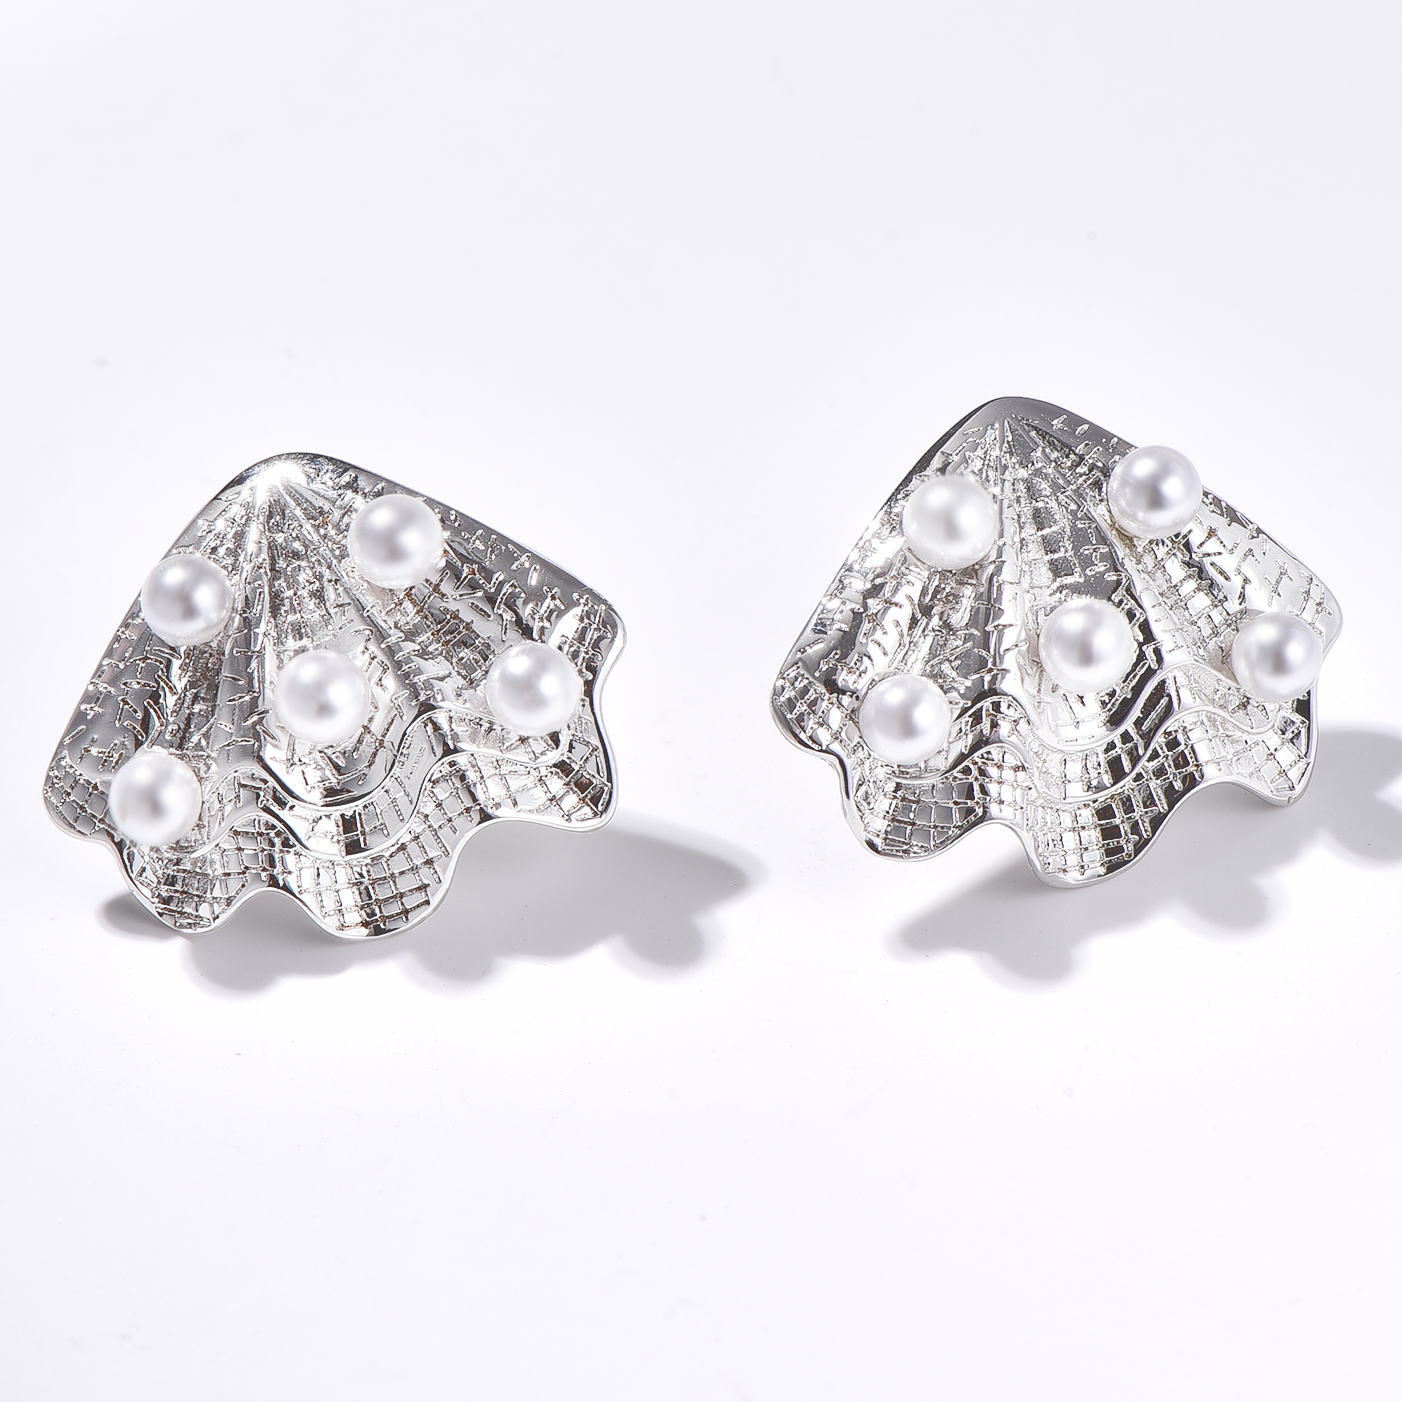 Shell Stud Earrings Inlaid with Pearls - Silver - Earrings - ONNNIII